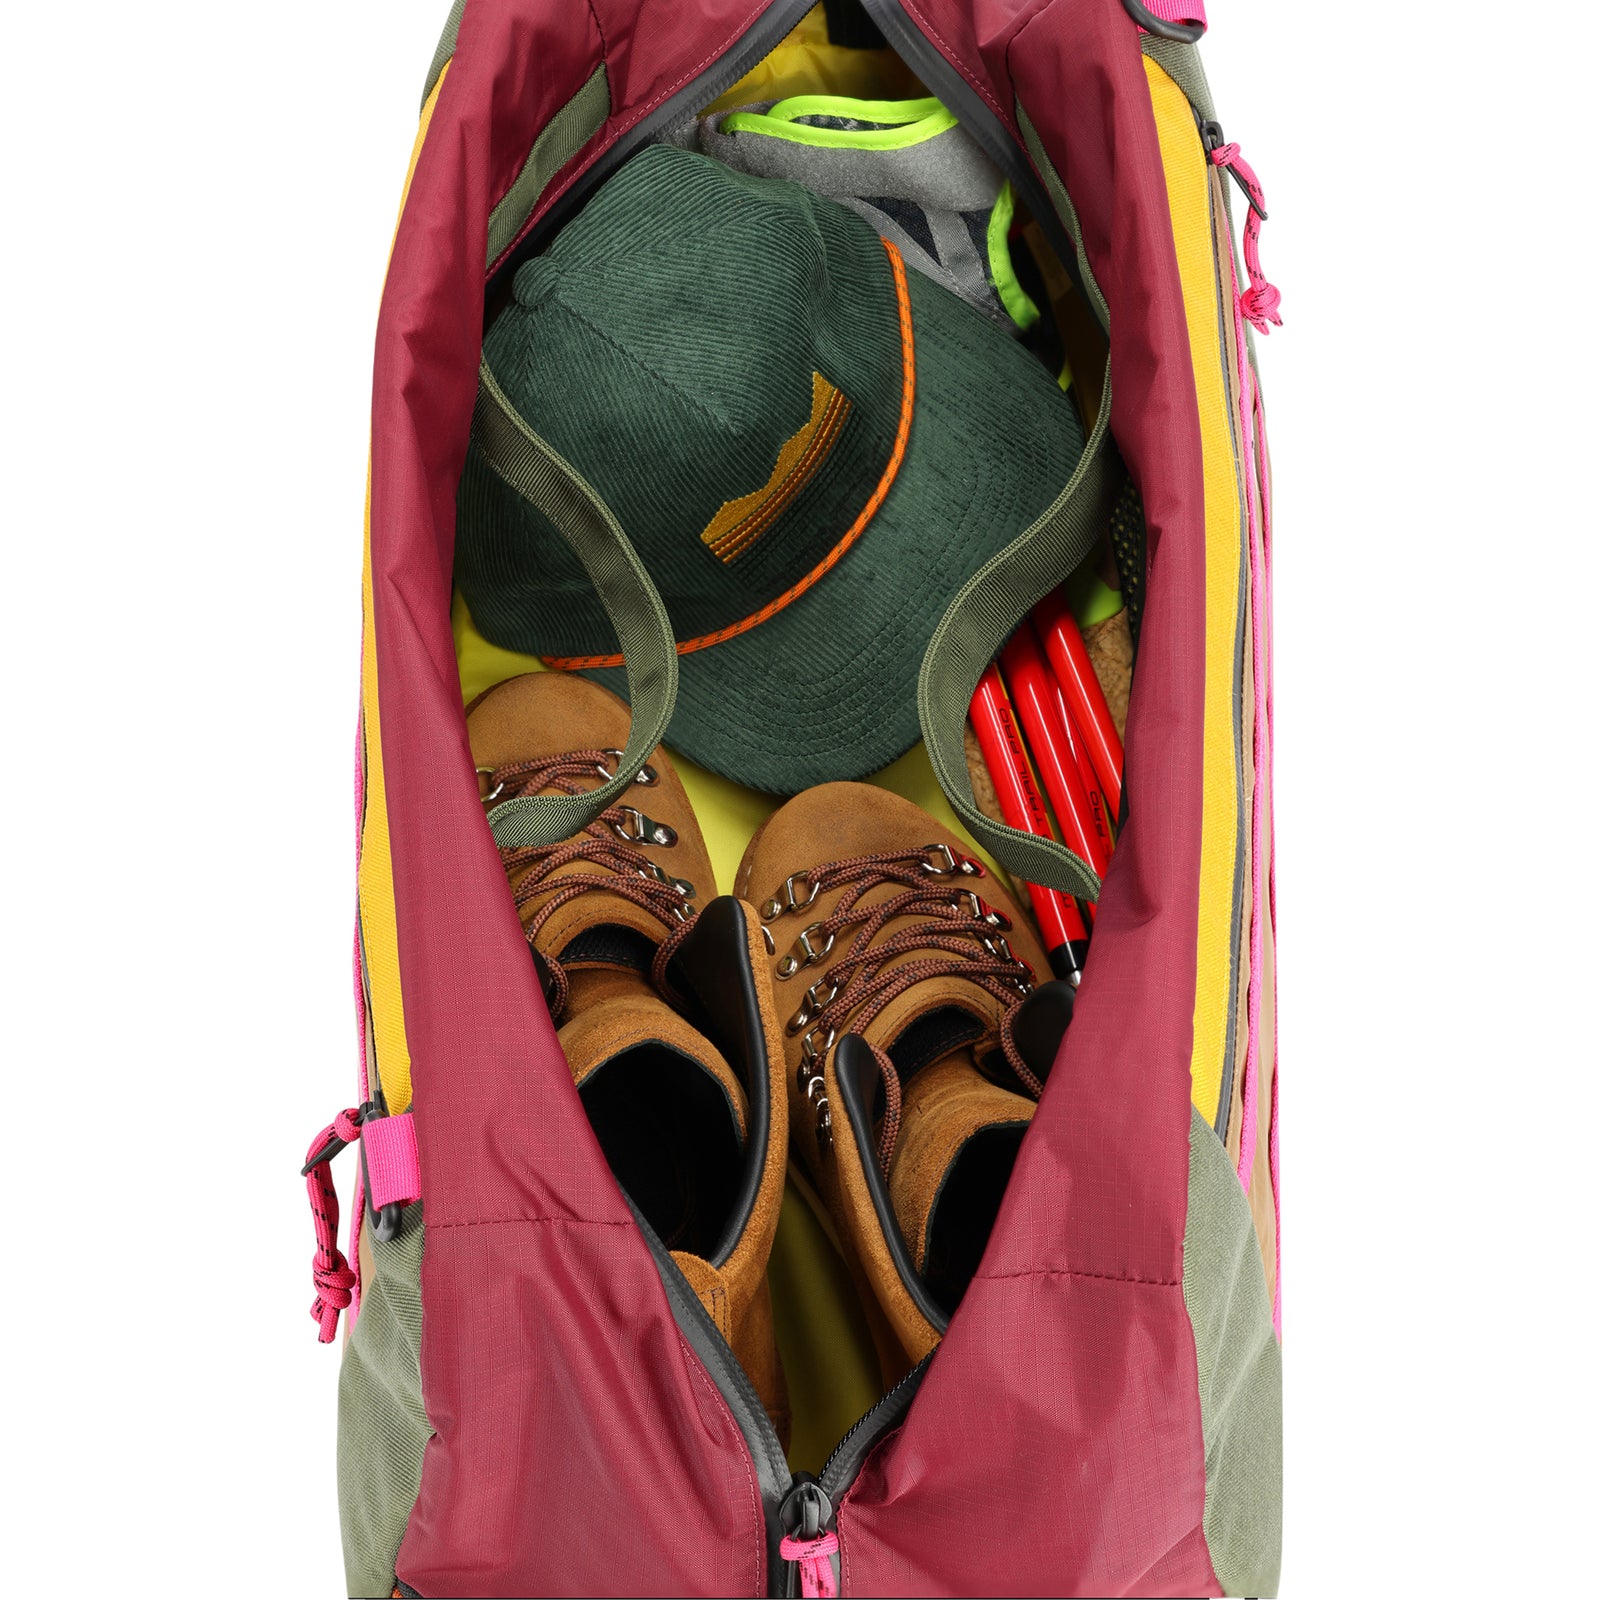 Photo of interior of Topo Designs Mountain Duffel 40L backpack gear bag in recycled "Burgundy / Dark Khaki" nylon.